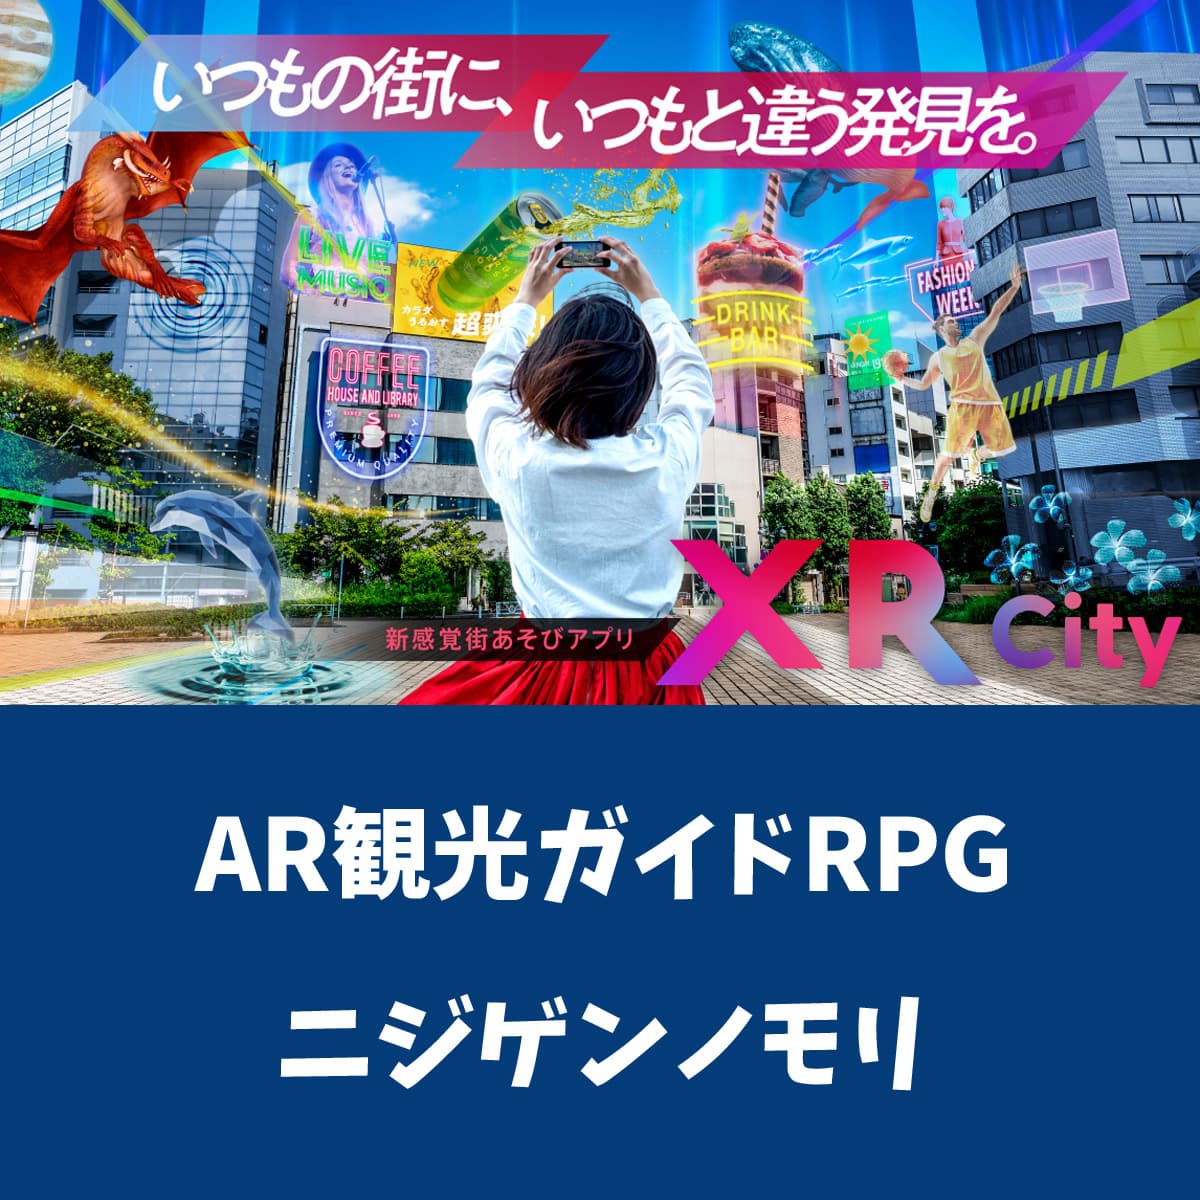 XR City「AR観光ガイドRPG」淡路島ニジゲンノモリ